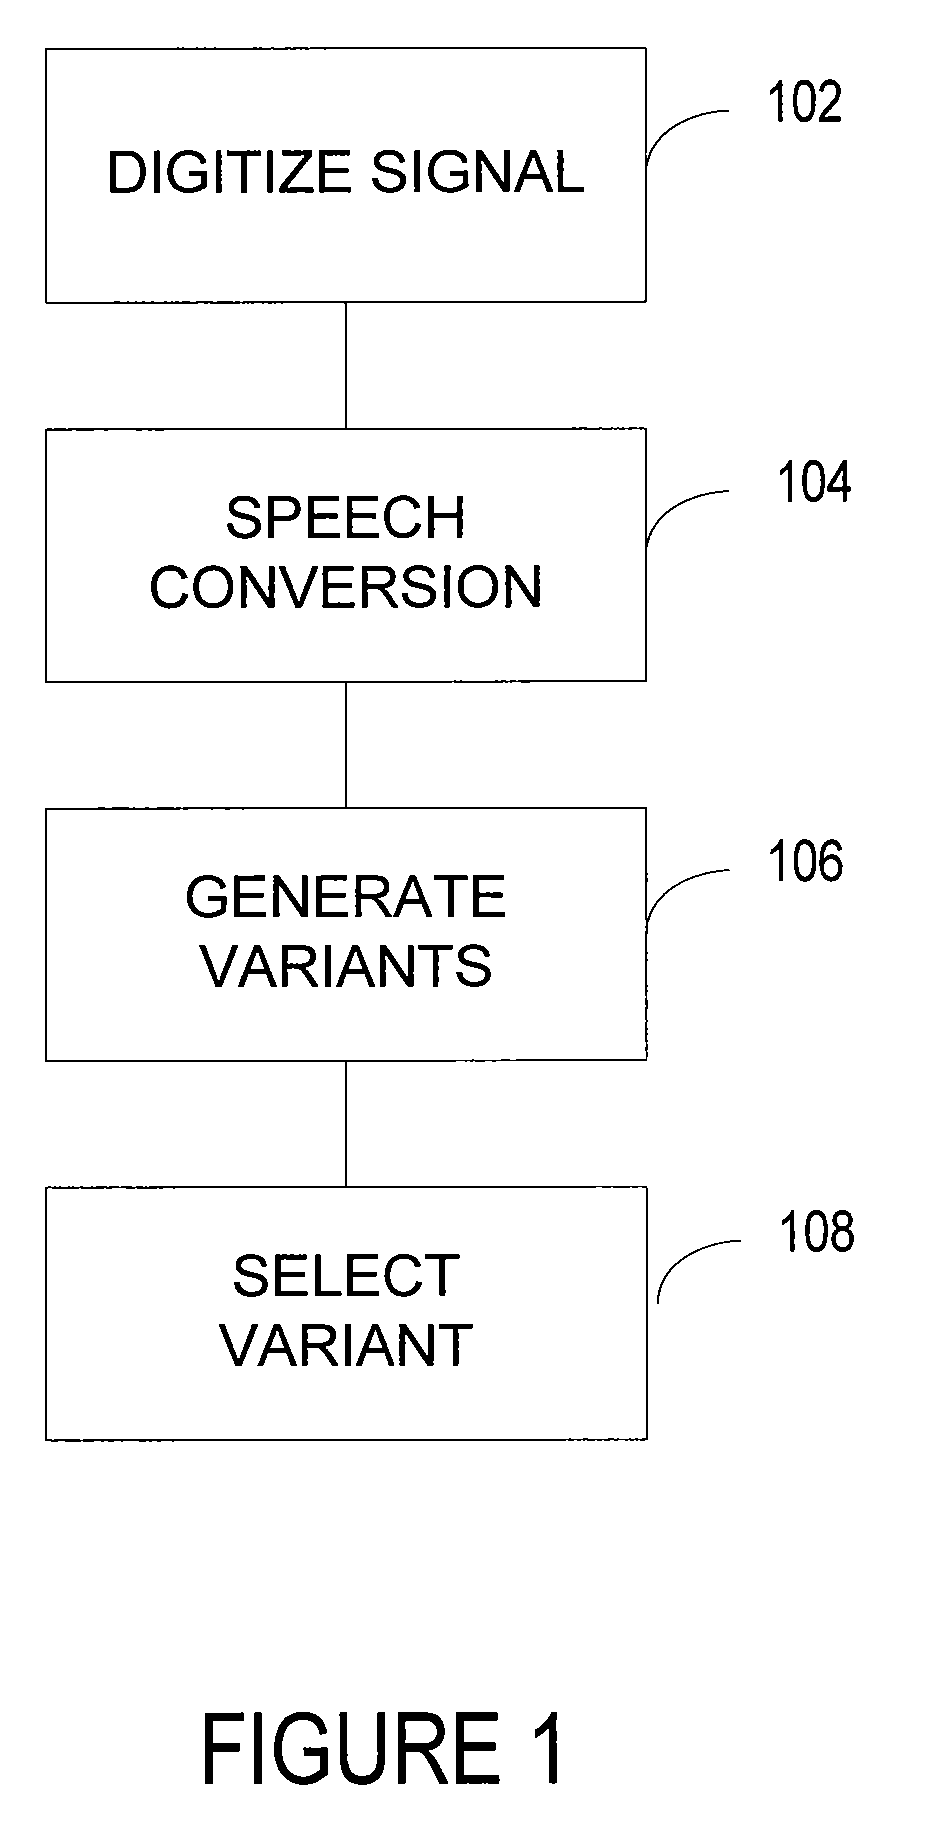 Context sensitive multi-stage speech recognition